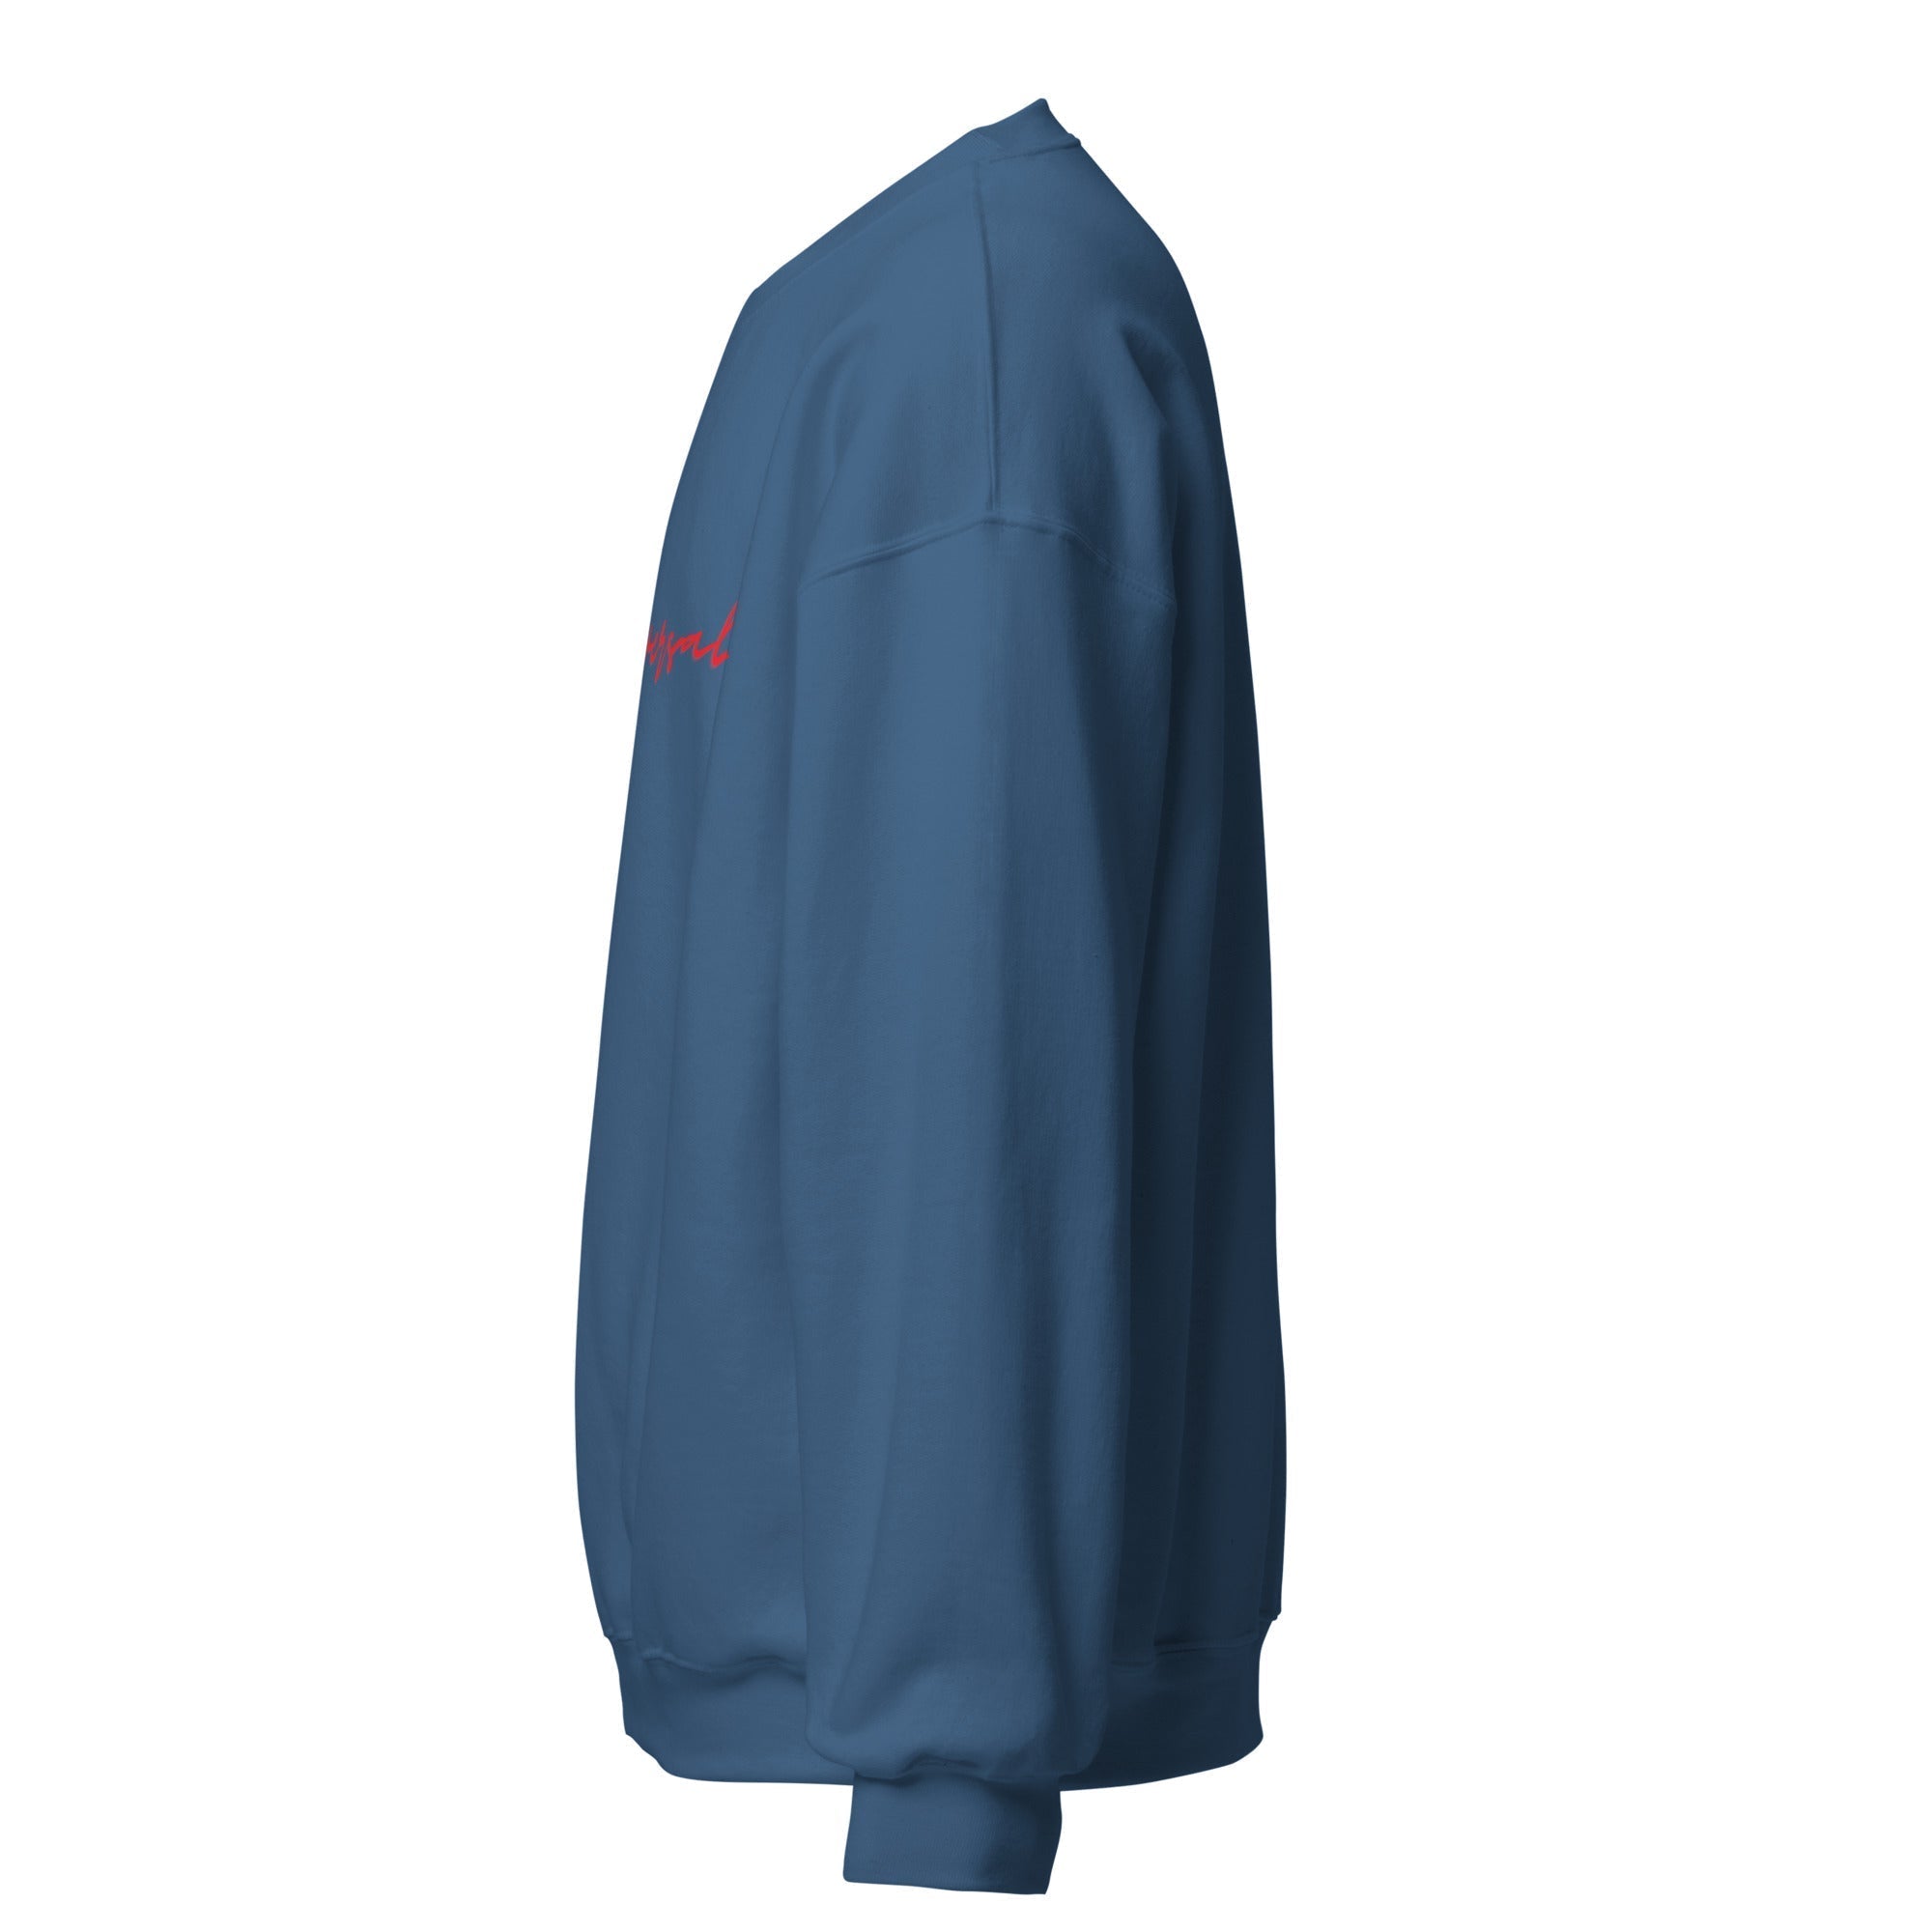 Unisex Crew Neck Sweatshirt - Universal - GRAPHIC T-SHIRTS